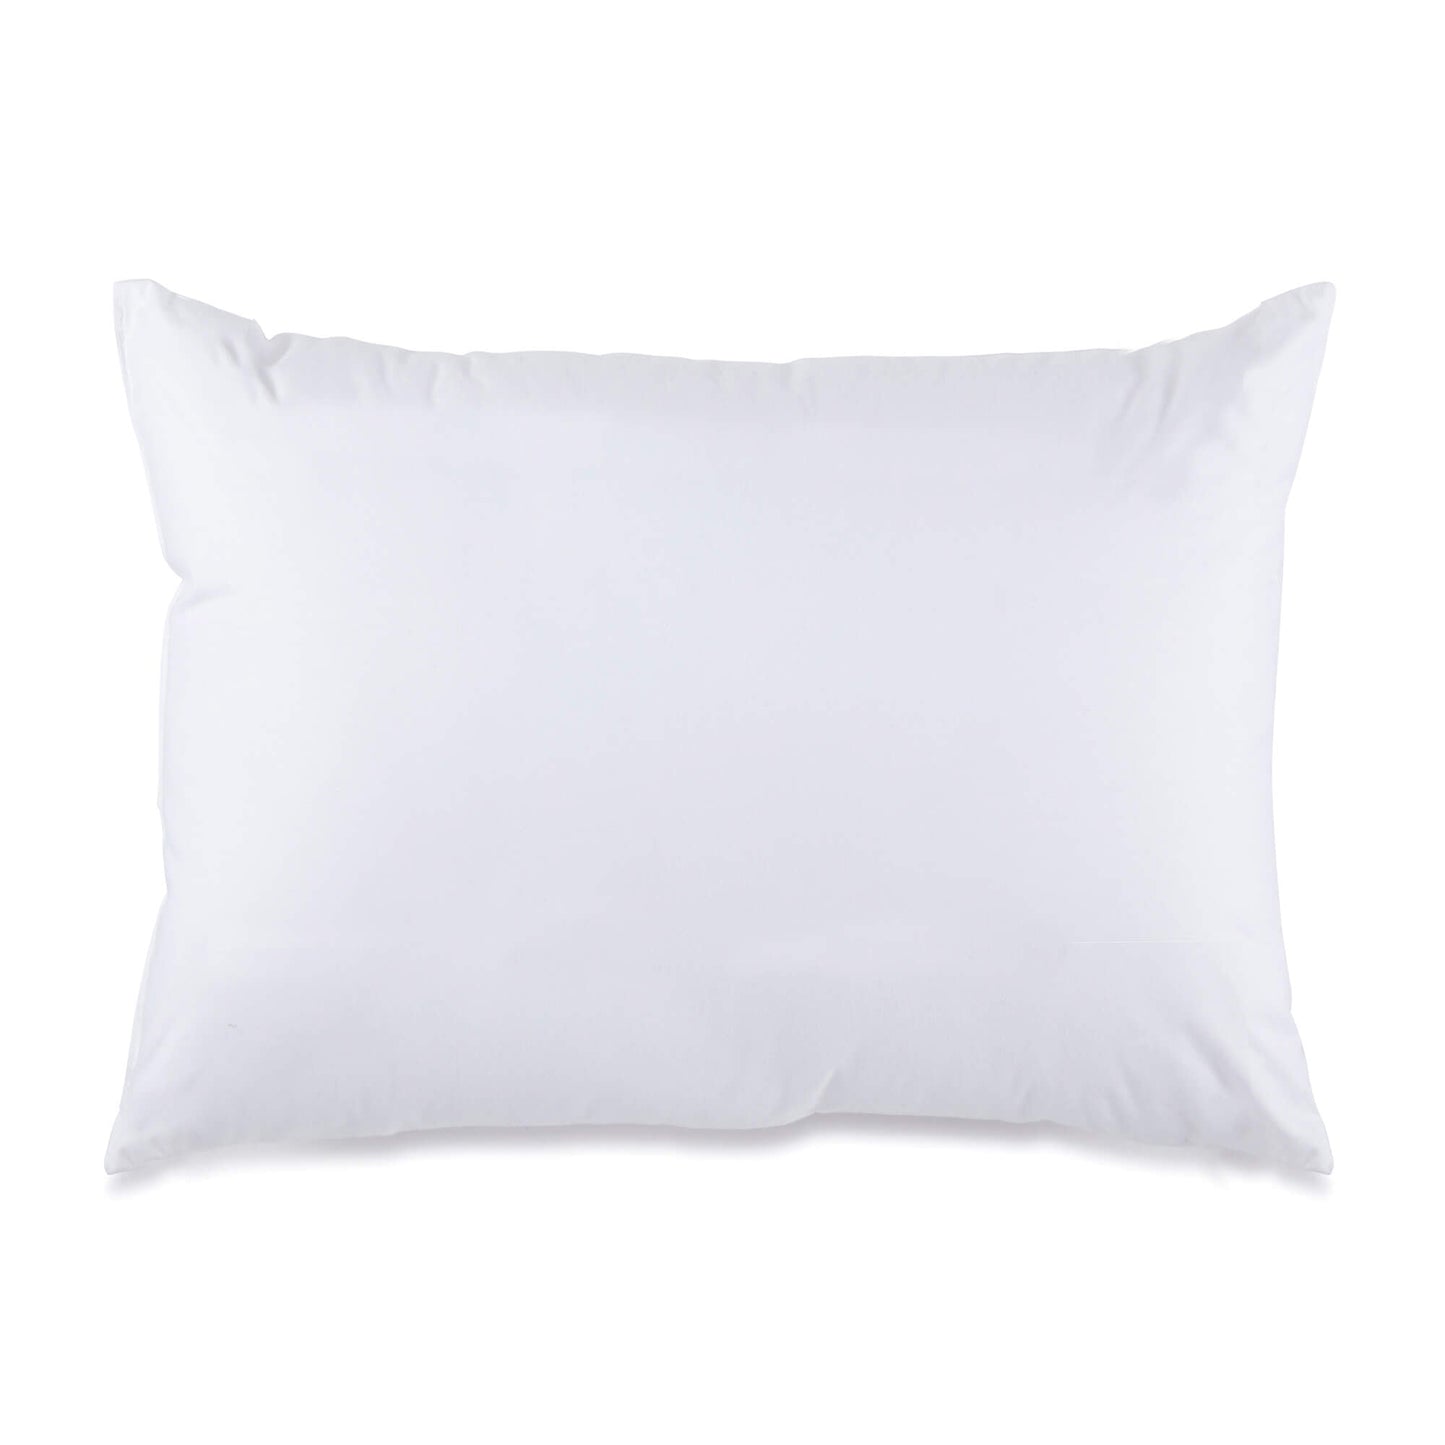 Luxury Down Alternative Pillow